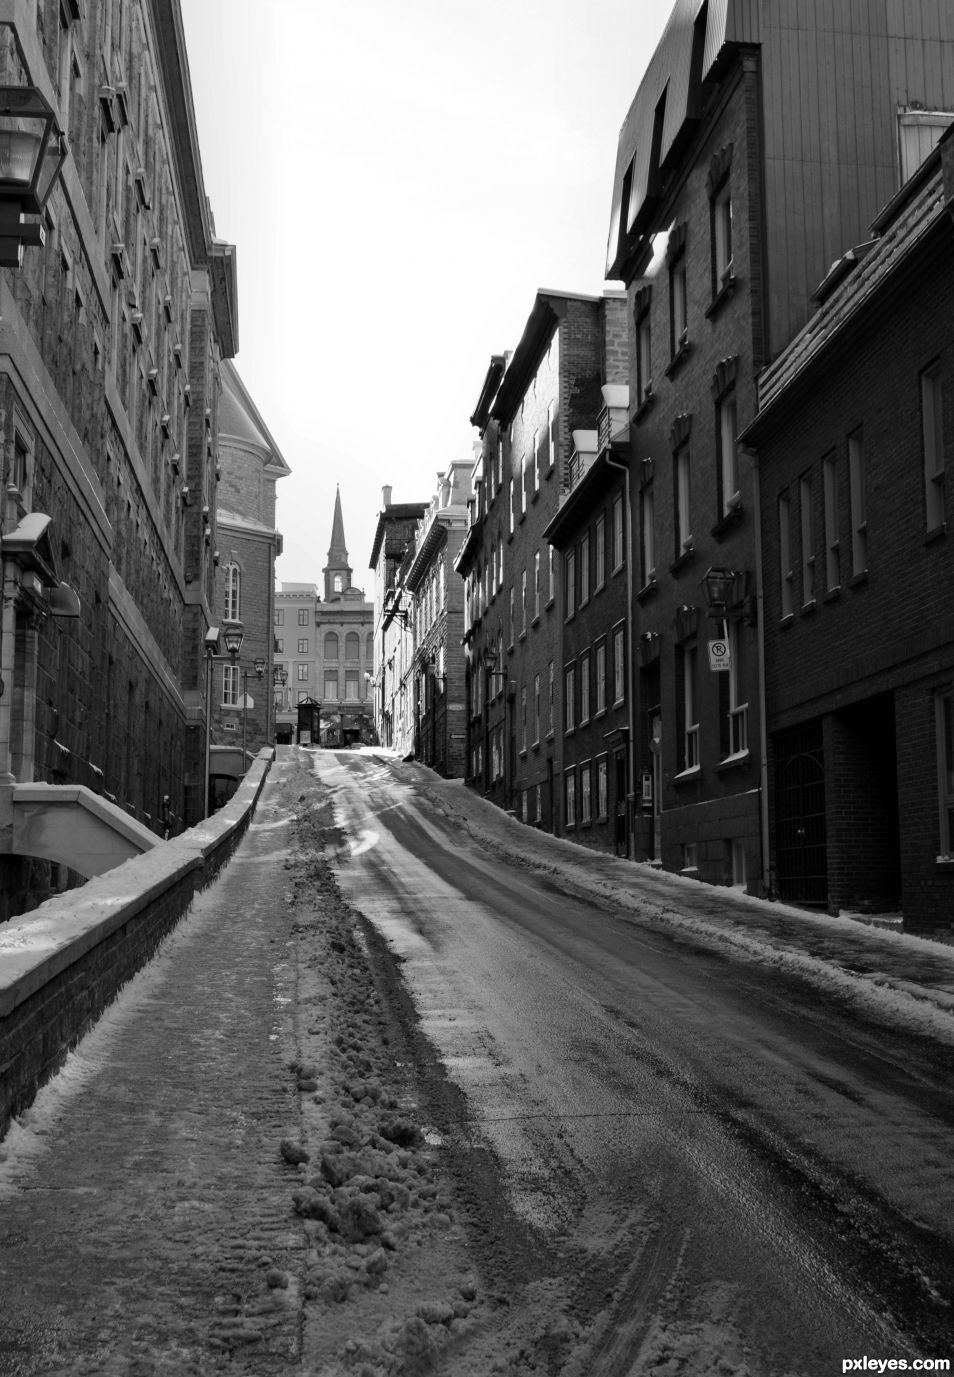 Icy street